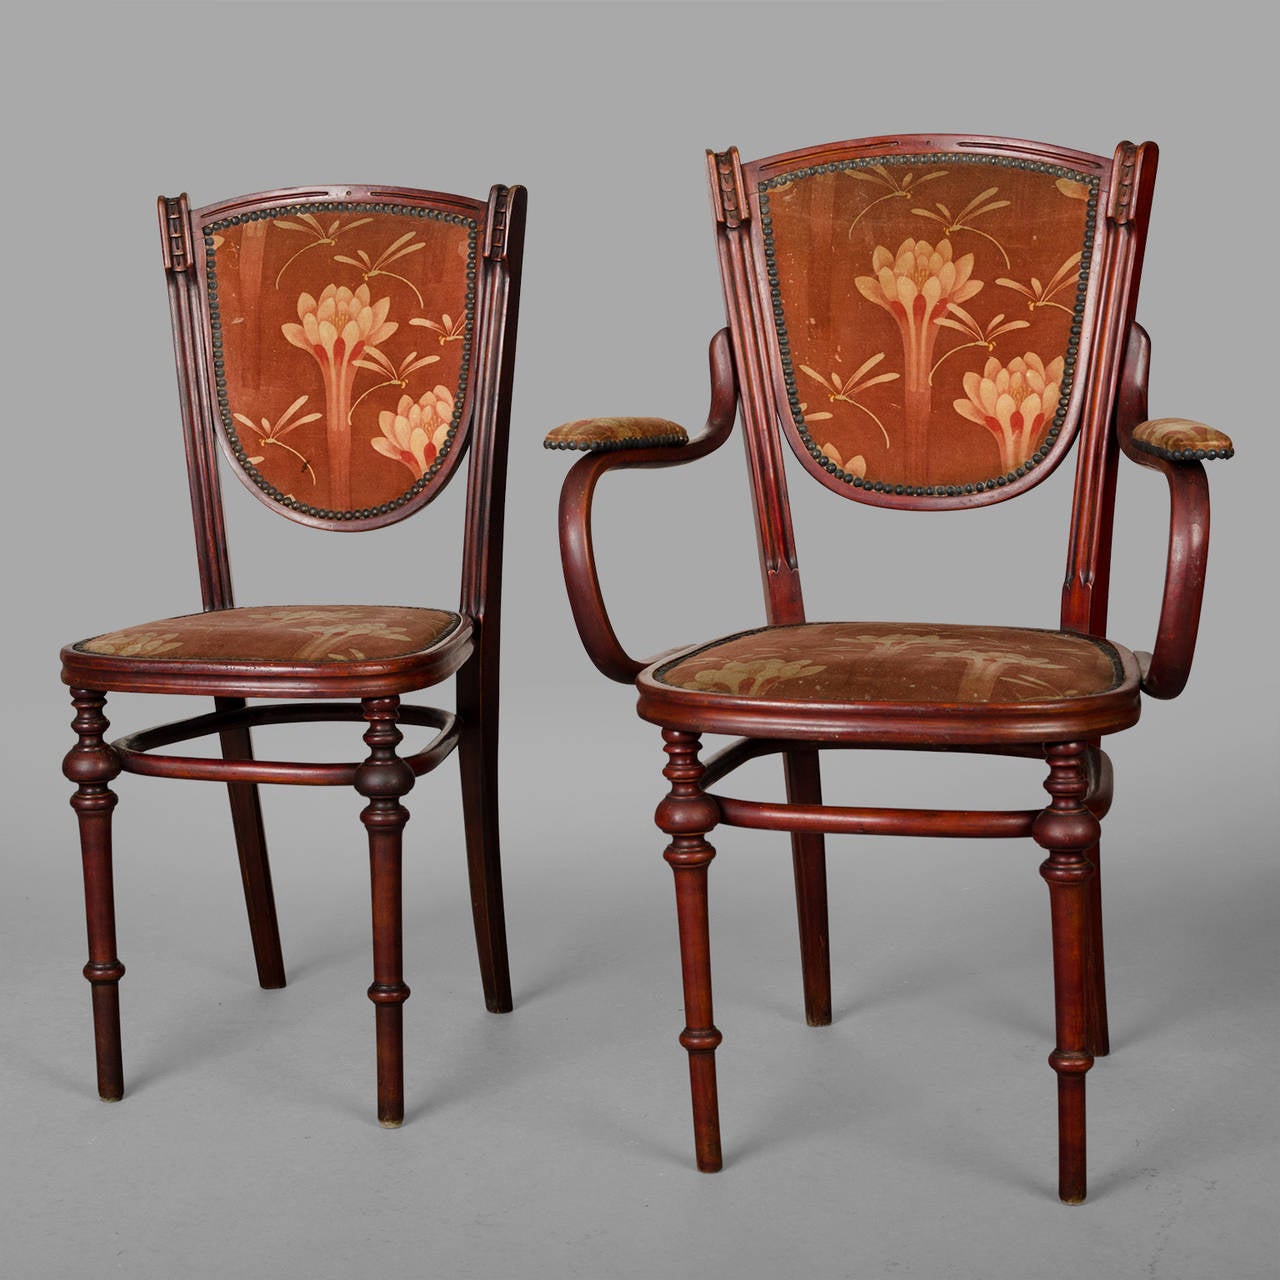 Small Art Nouveau Period Living Room Chairs, circa 1900 5